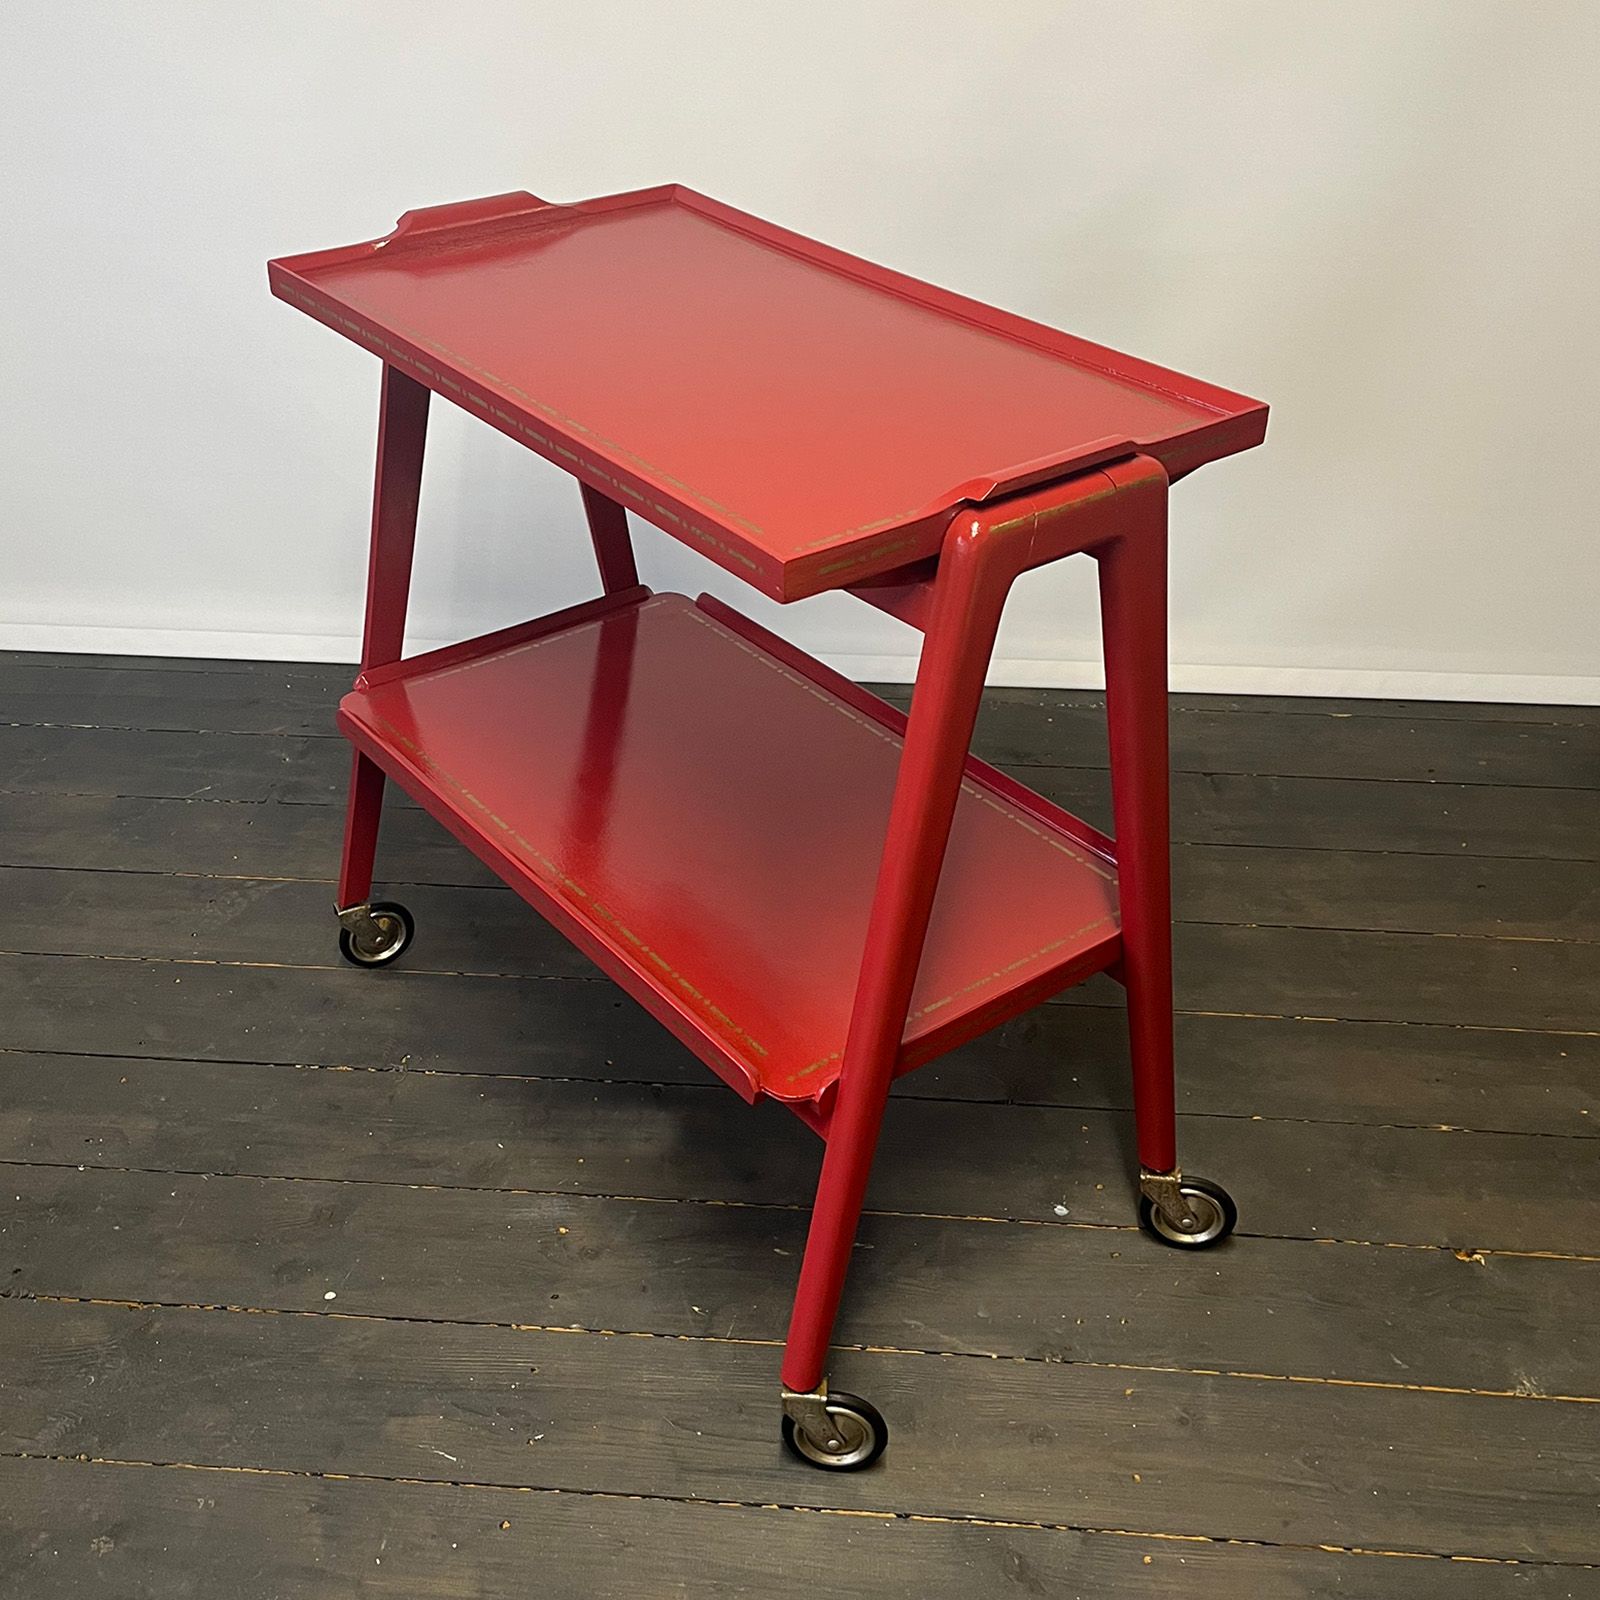 Retro red drinks trolley finished in Helen Bateman Upcyled's Edinburgh studio